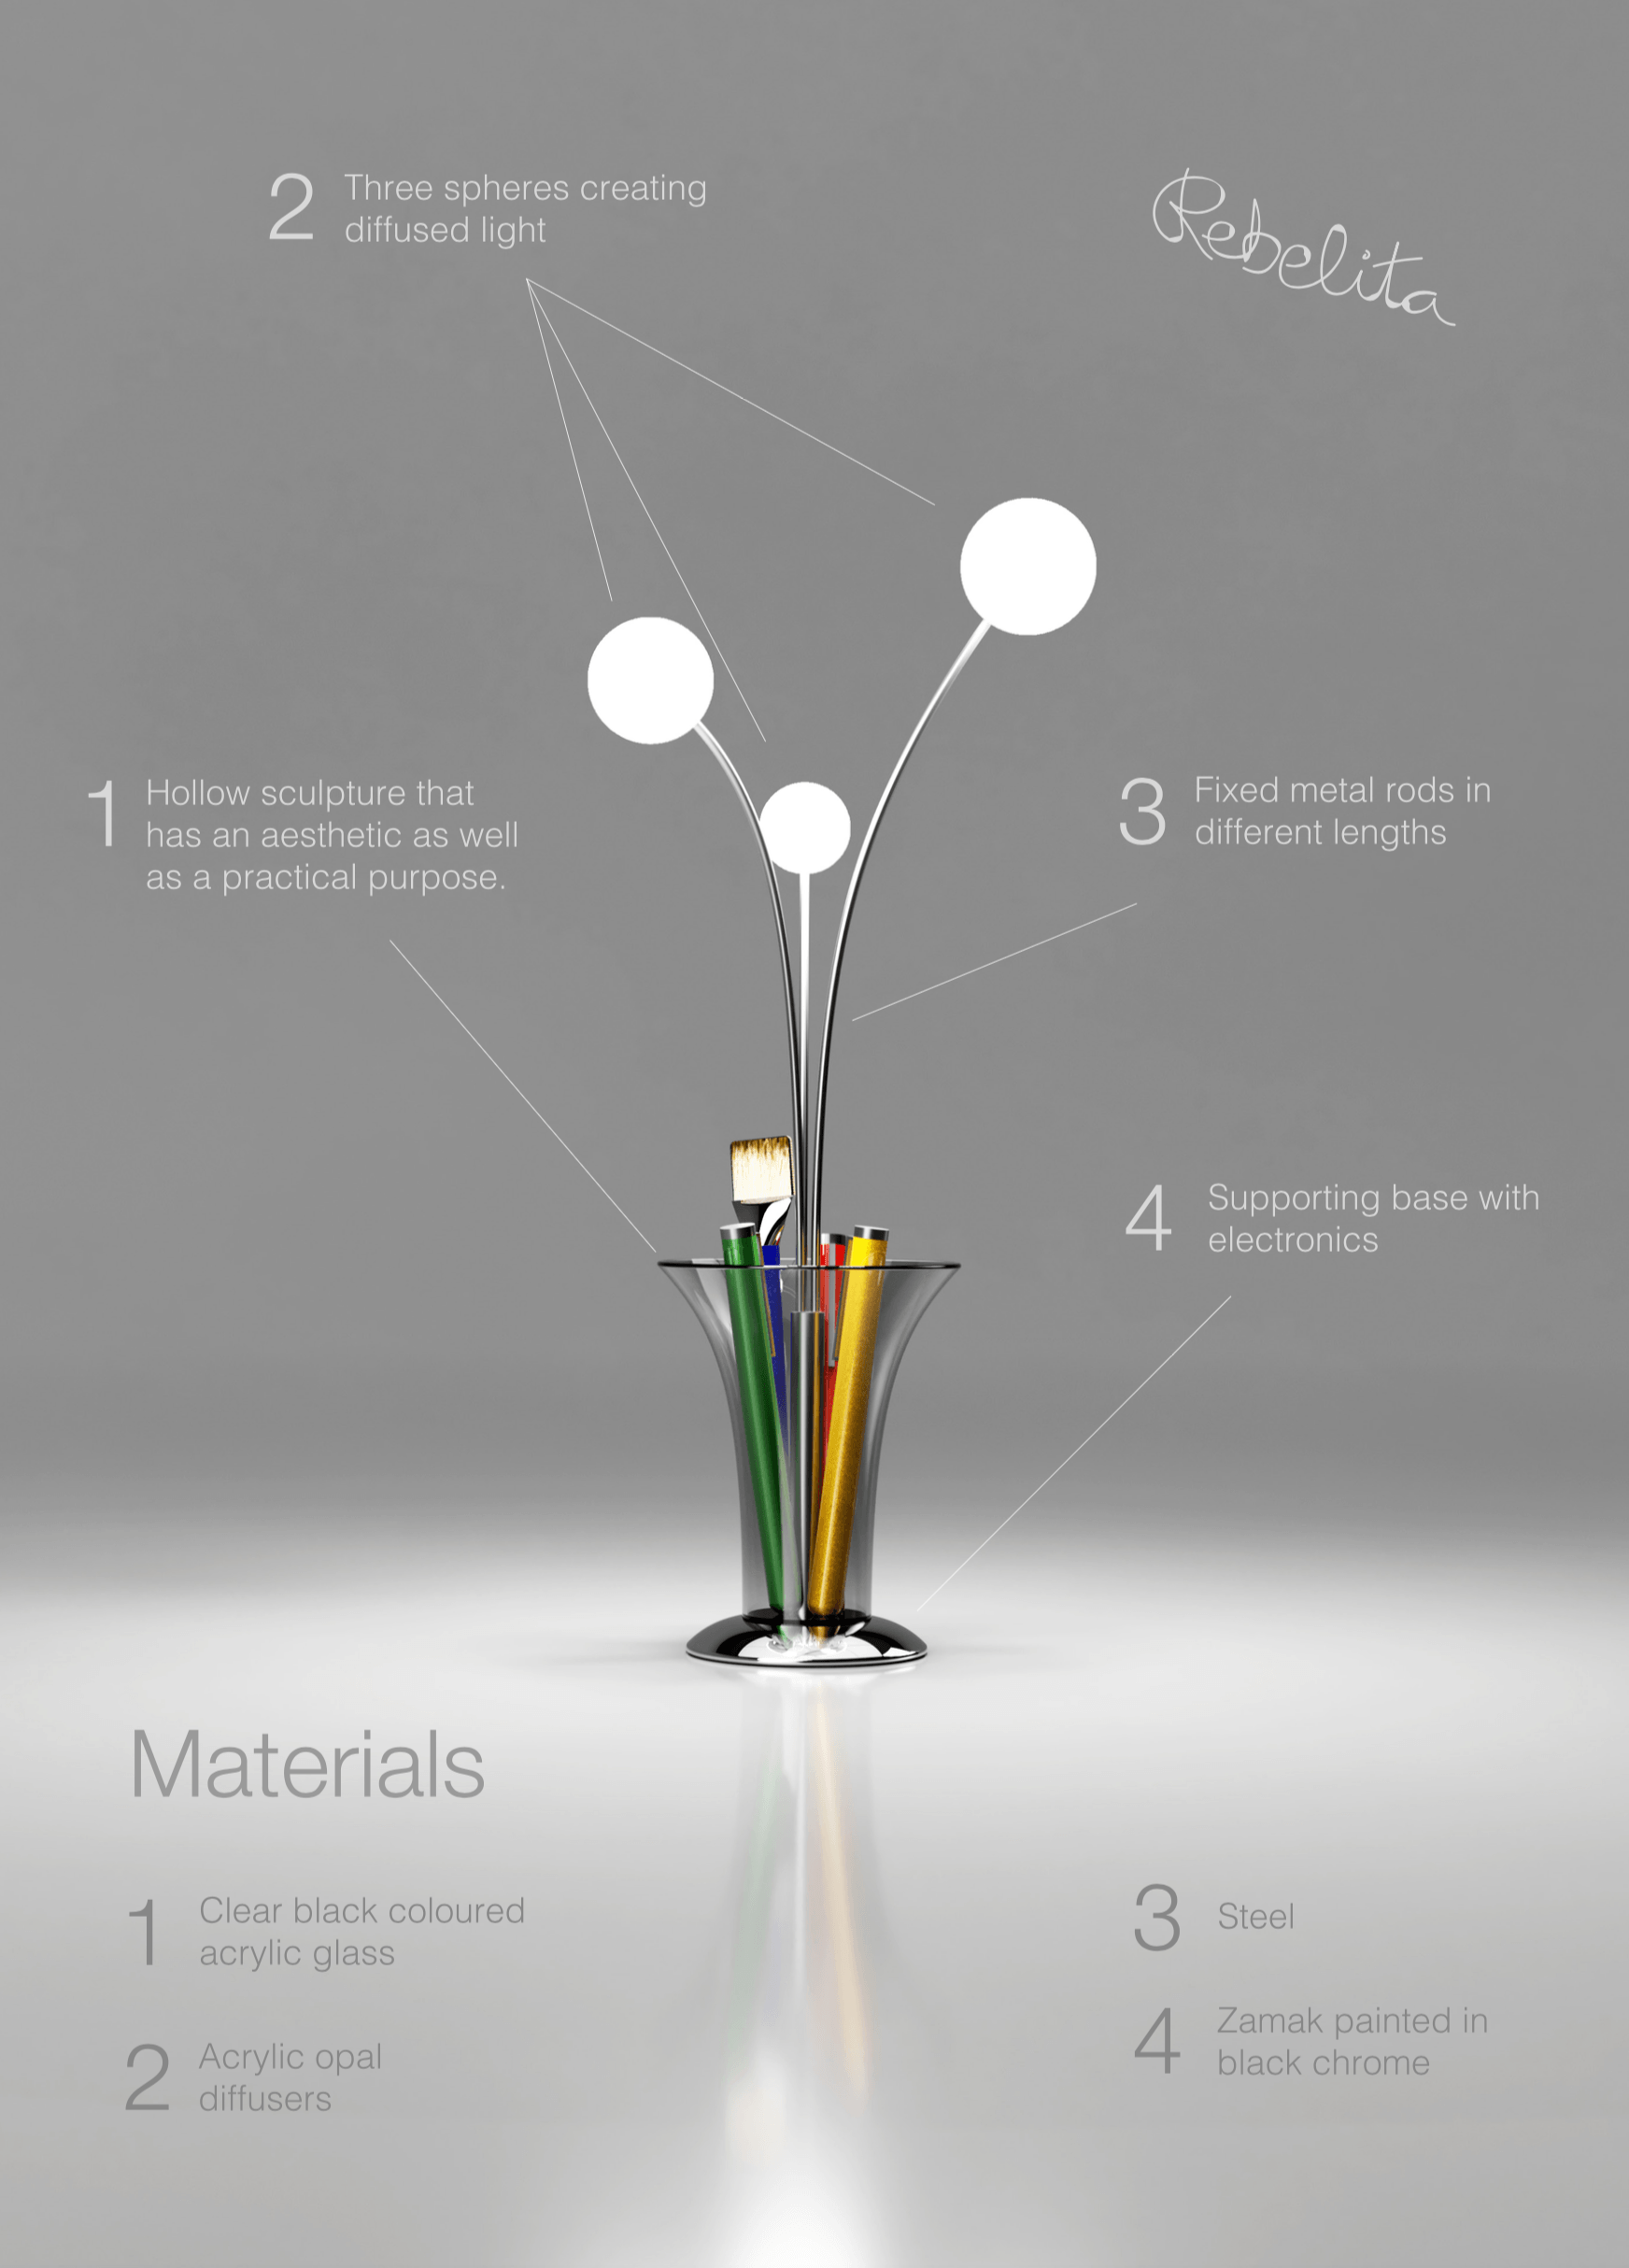 Průmyslový design od Miroslavo: Rebelita (lampa)